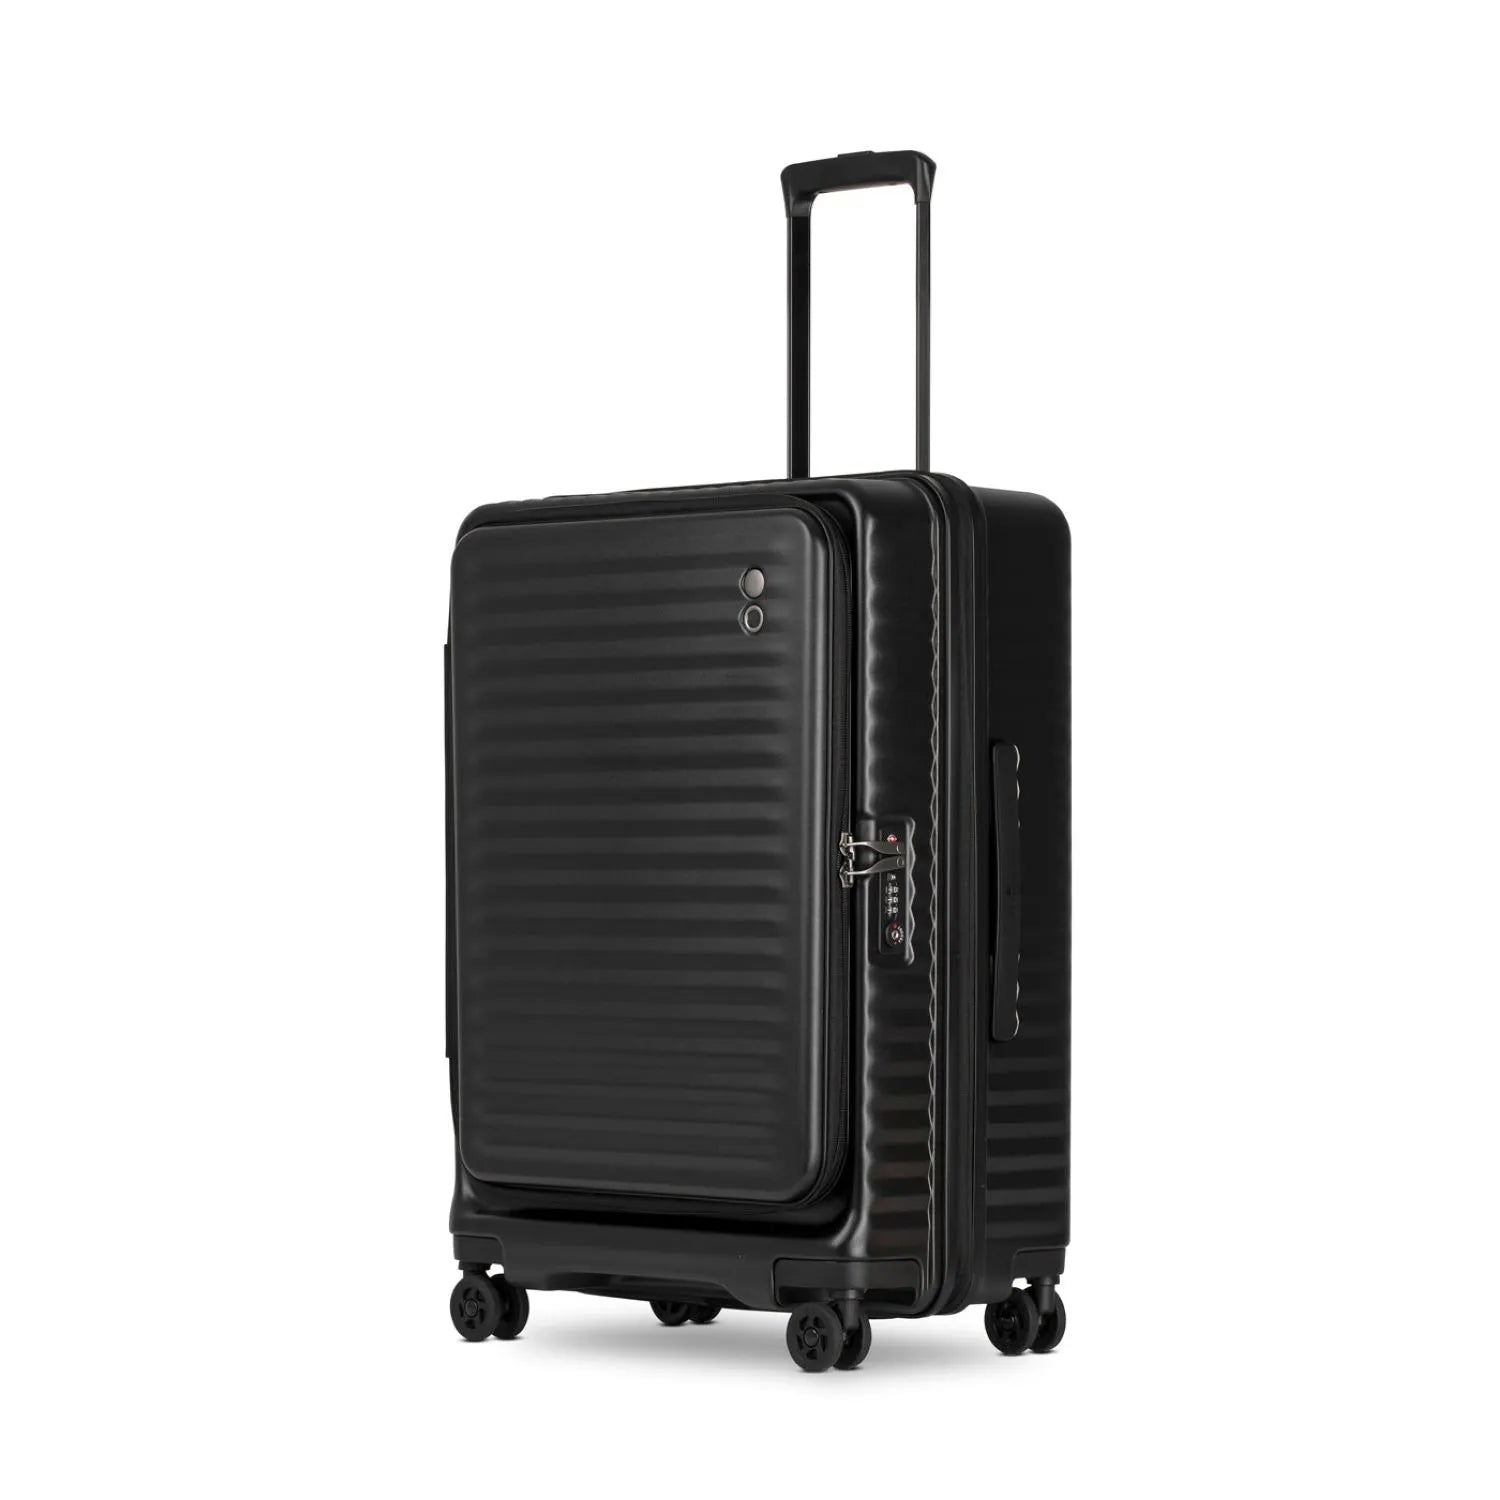 Echolac Celestra 24" Check-In Luggage Trolley Black - PC183 Black 24